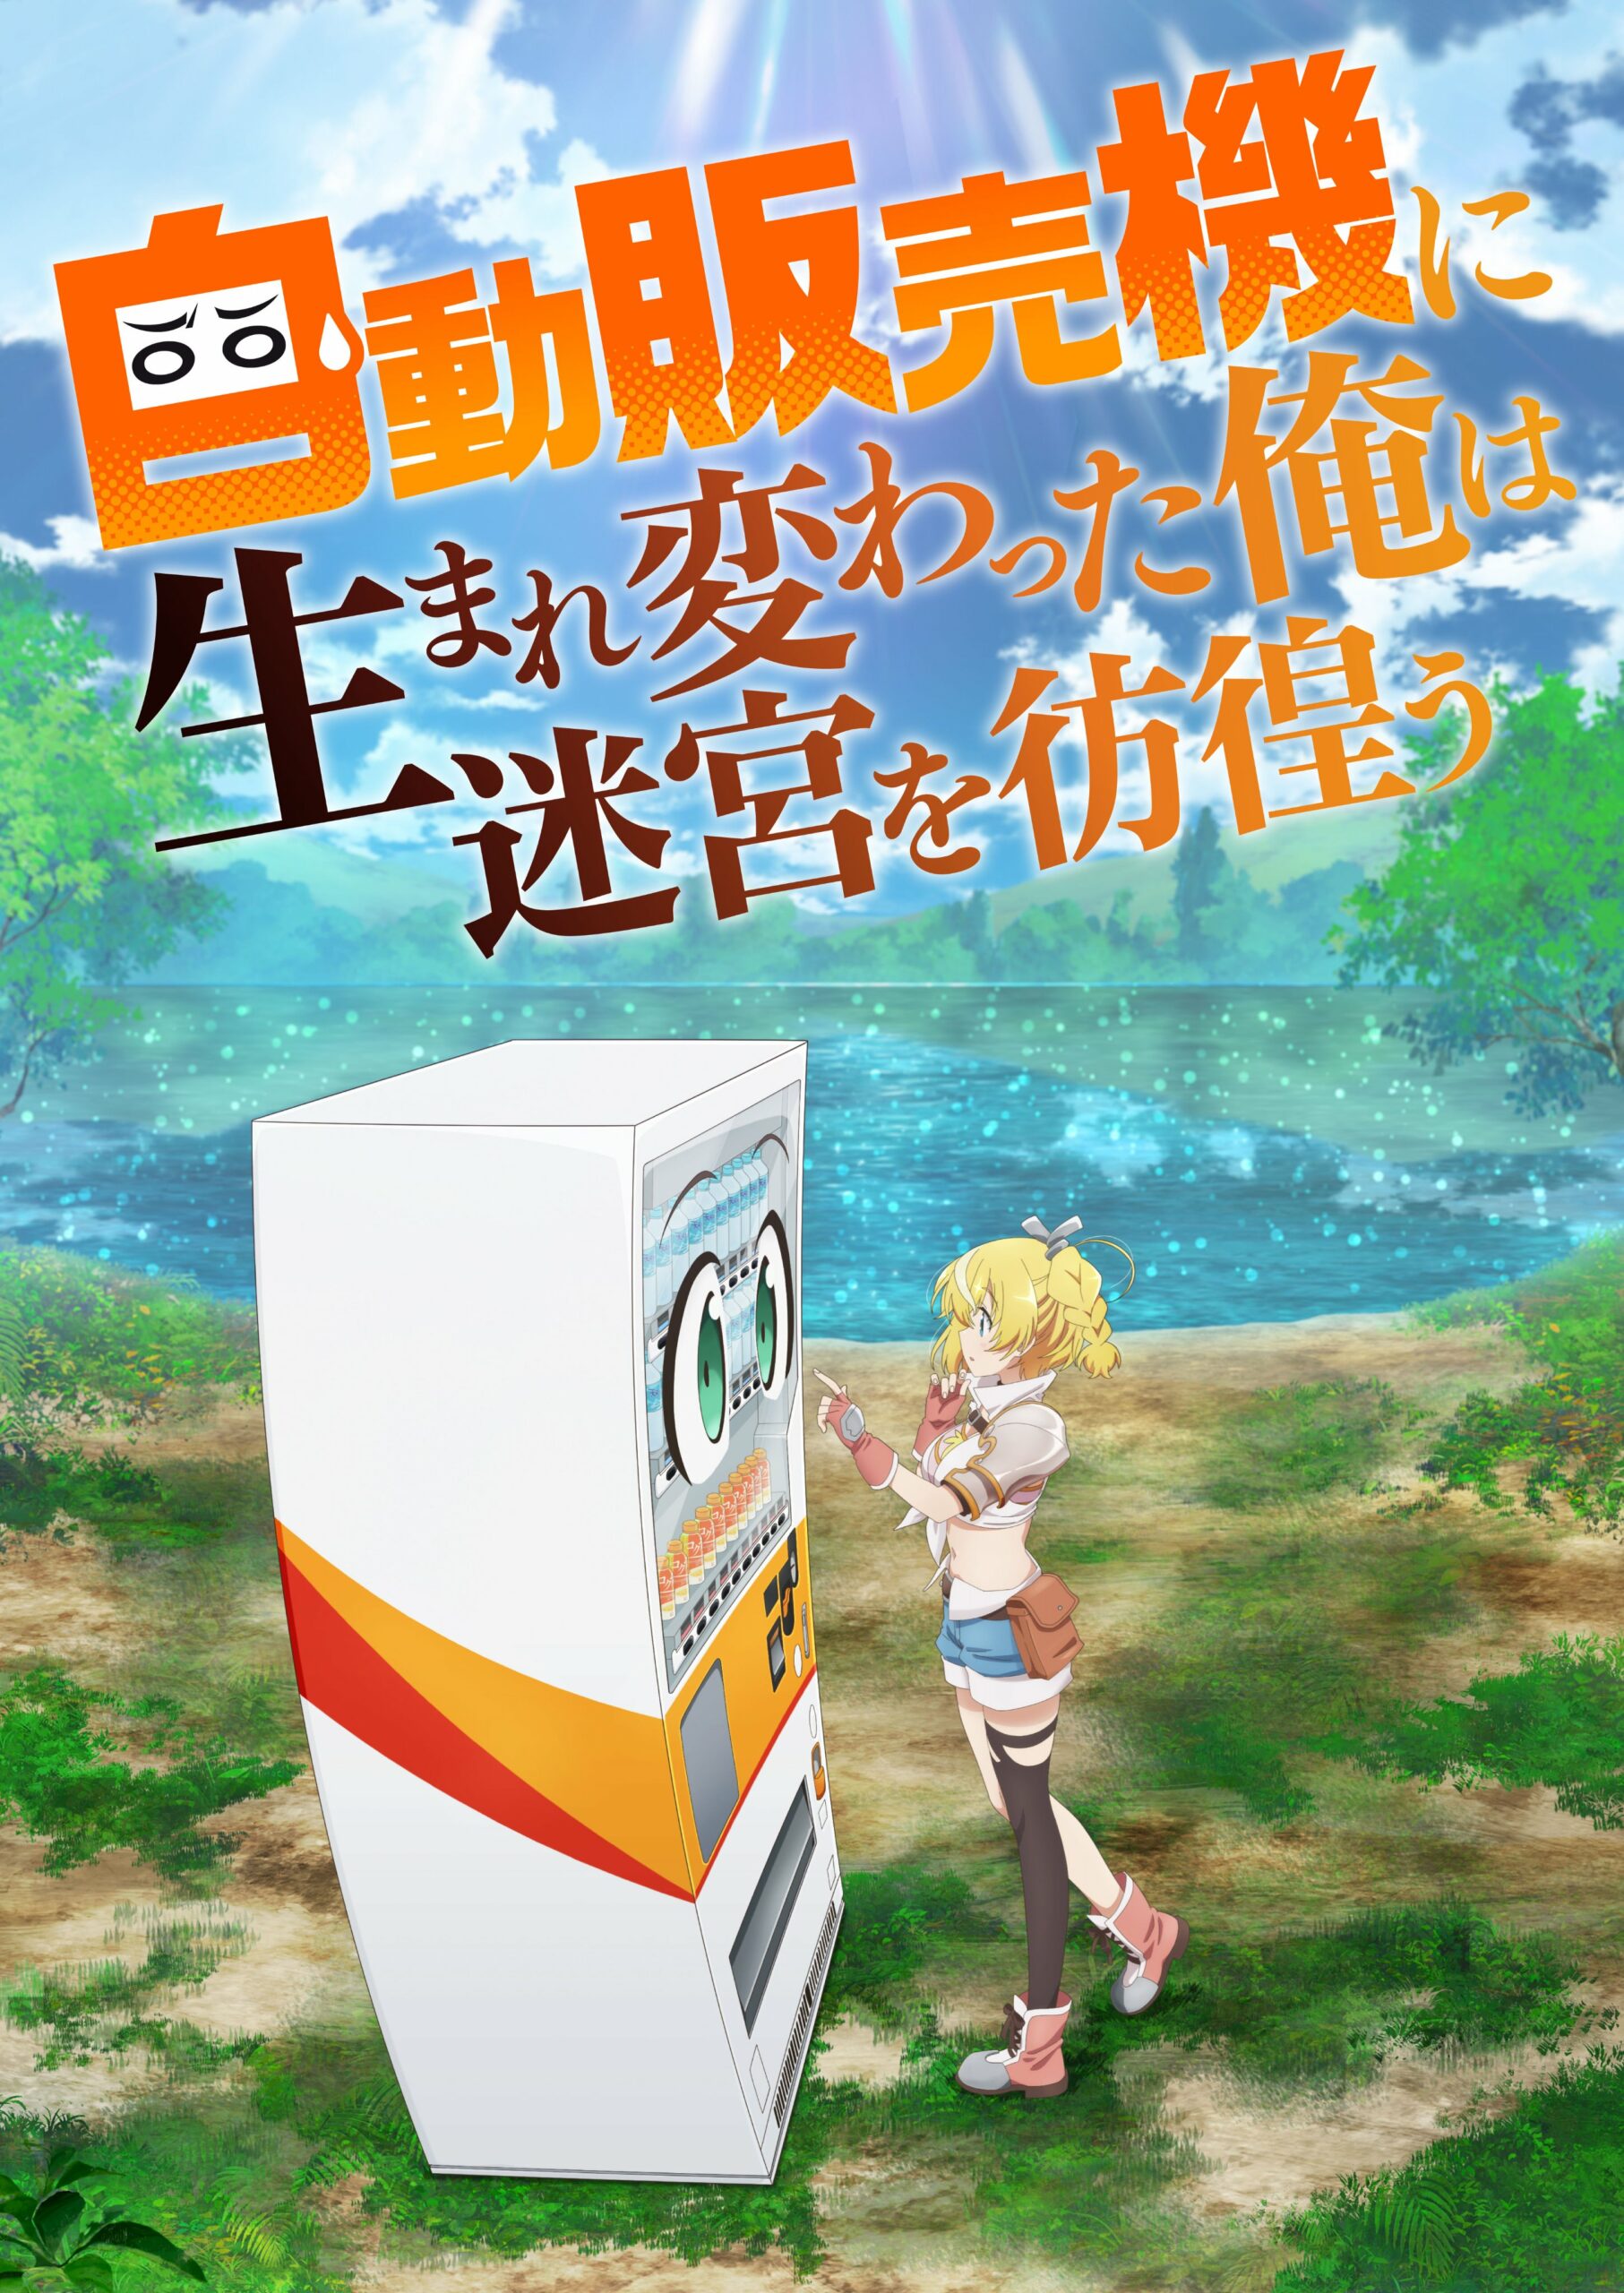 Reborn as a Vending Machine anime